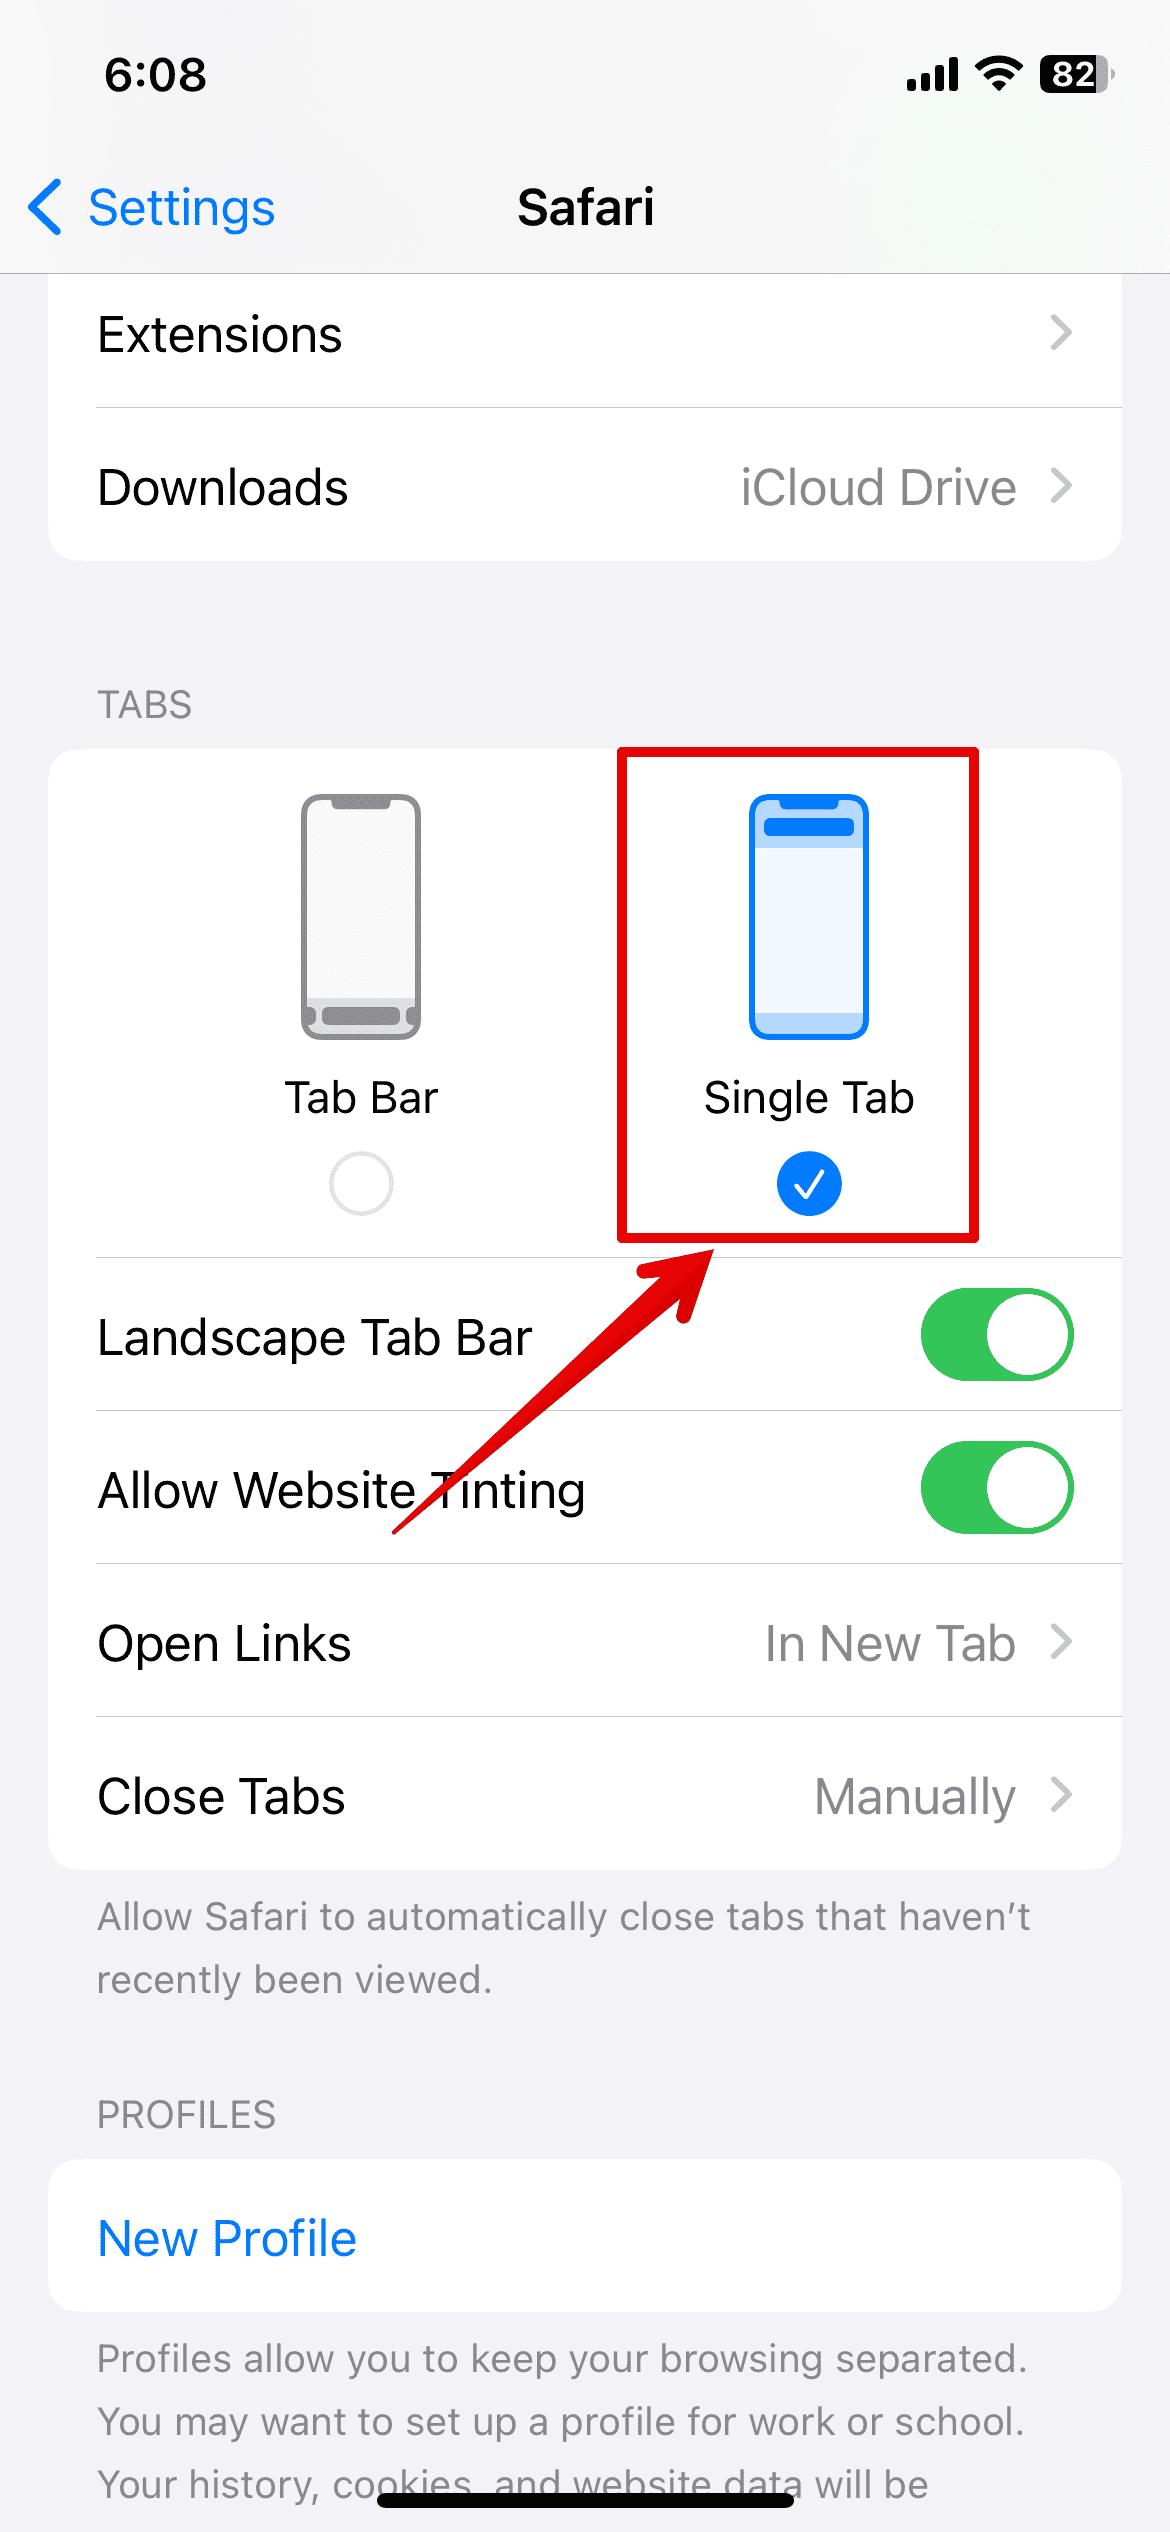 Select Single Tab